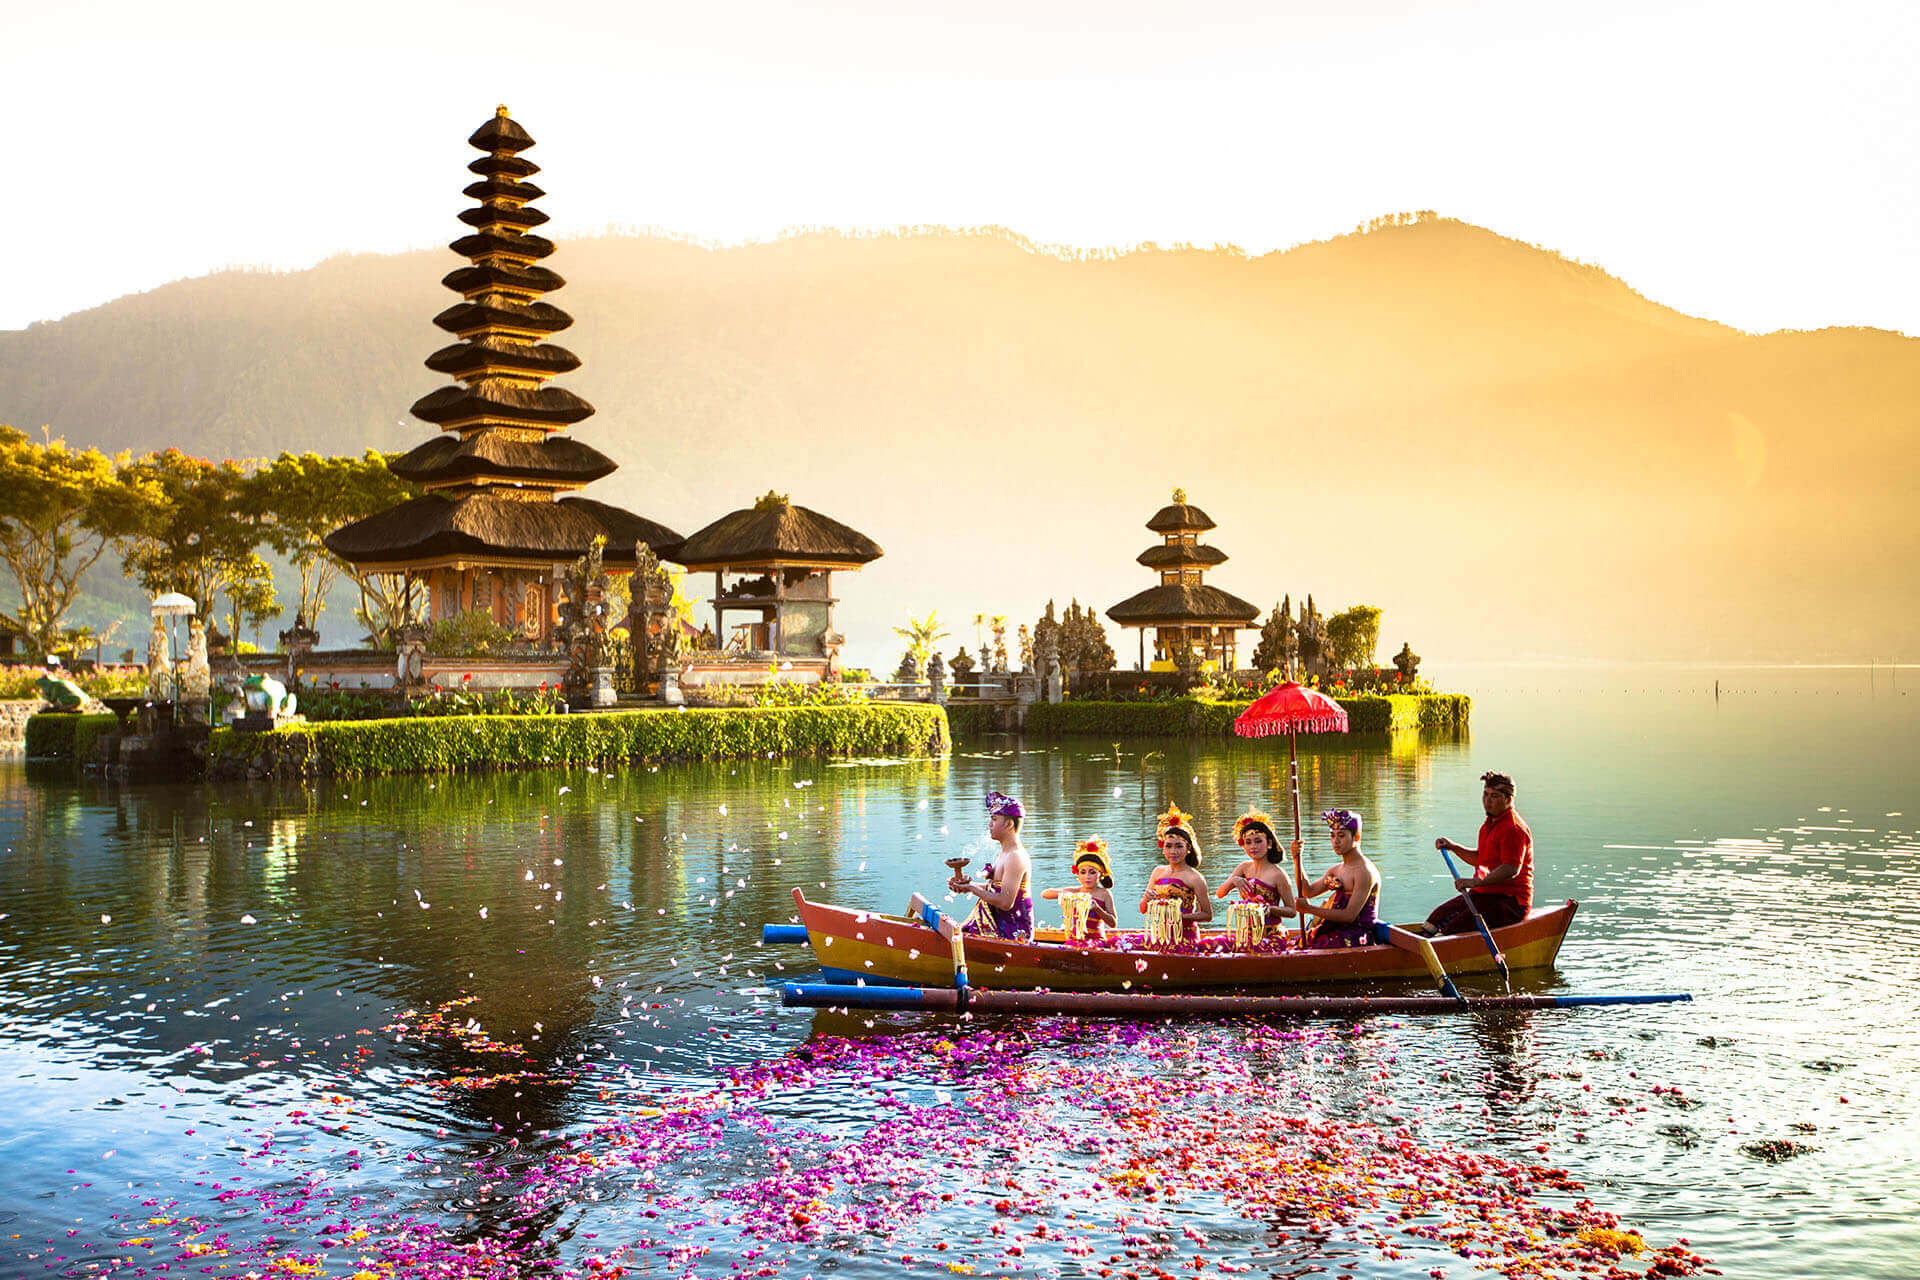 Indonesia: E-Visa Introduced for Certain Visa Applicants